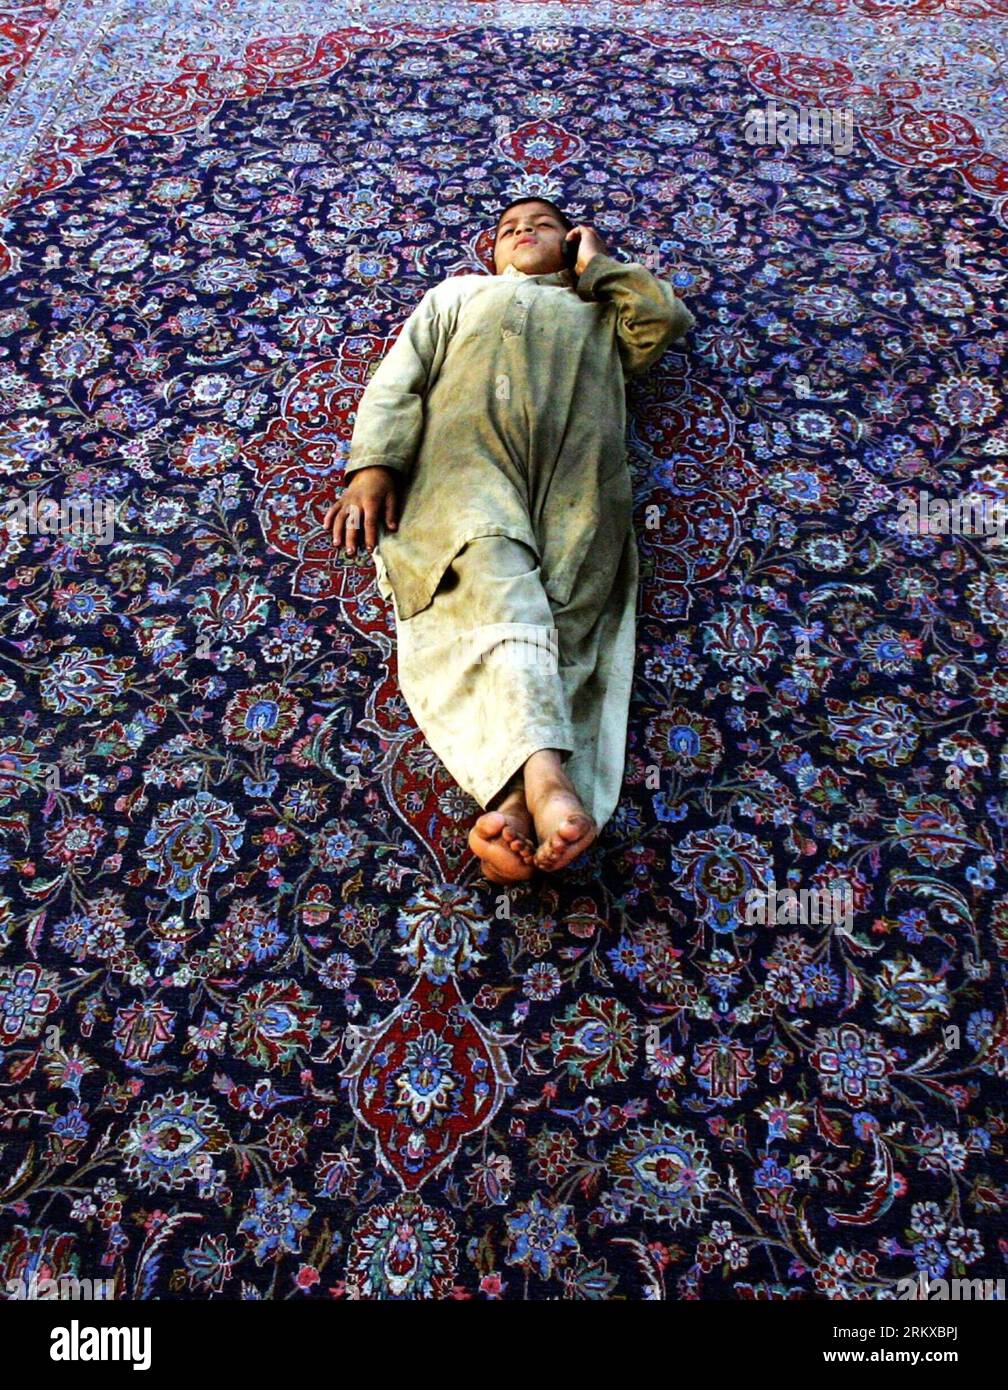 Bildnummer: 58936435  Datum: 20.12.2012  Copyright: imago/Xinhua (121220) -- PESHAWAR, Dec. 20, 2012 (Xinhua) -- A Pakistani boy rests on a hand-made carpet at a local carpet factory in northwest Pakistan s Peshawar, Dec. 20, 2012. According to reports, Pakistan s carpet exports have witnessed a huge decline of more than 50 percent during the last five years. (Xinhua/Ahmad Sidique) (zf) PAKISTAN-PESHAWAR-CARPET EXPORTS-DECREASE PUBLICATIONxNOTxINxCHN Wirtschaft Arbeit Teppich Fabrik Teppichfabrik x0x xdd 2012 hoch      58936435 Date 20 12 2012 Copyright Imago XINHUA  Peshawar DEC 20 2012 XINHU Stock Photo